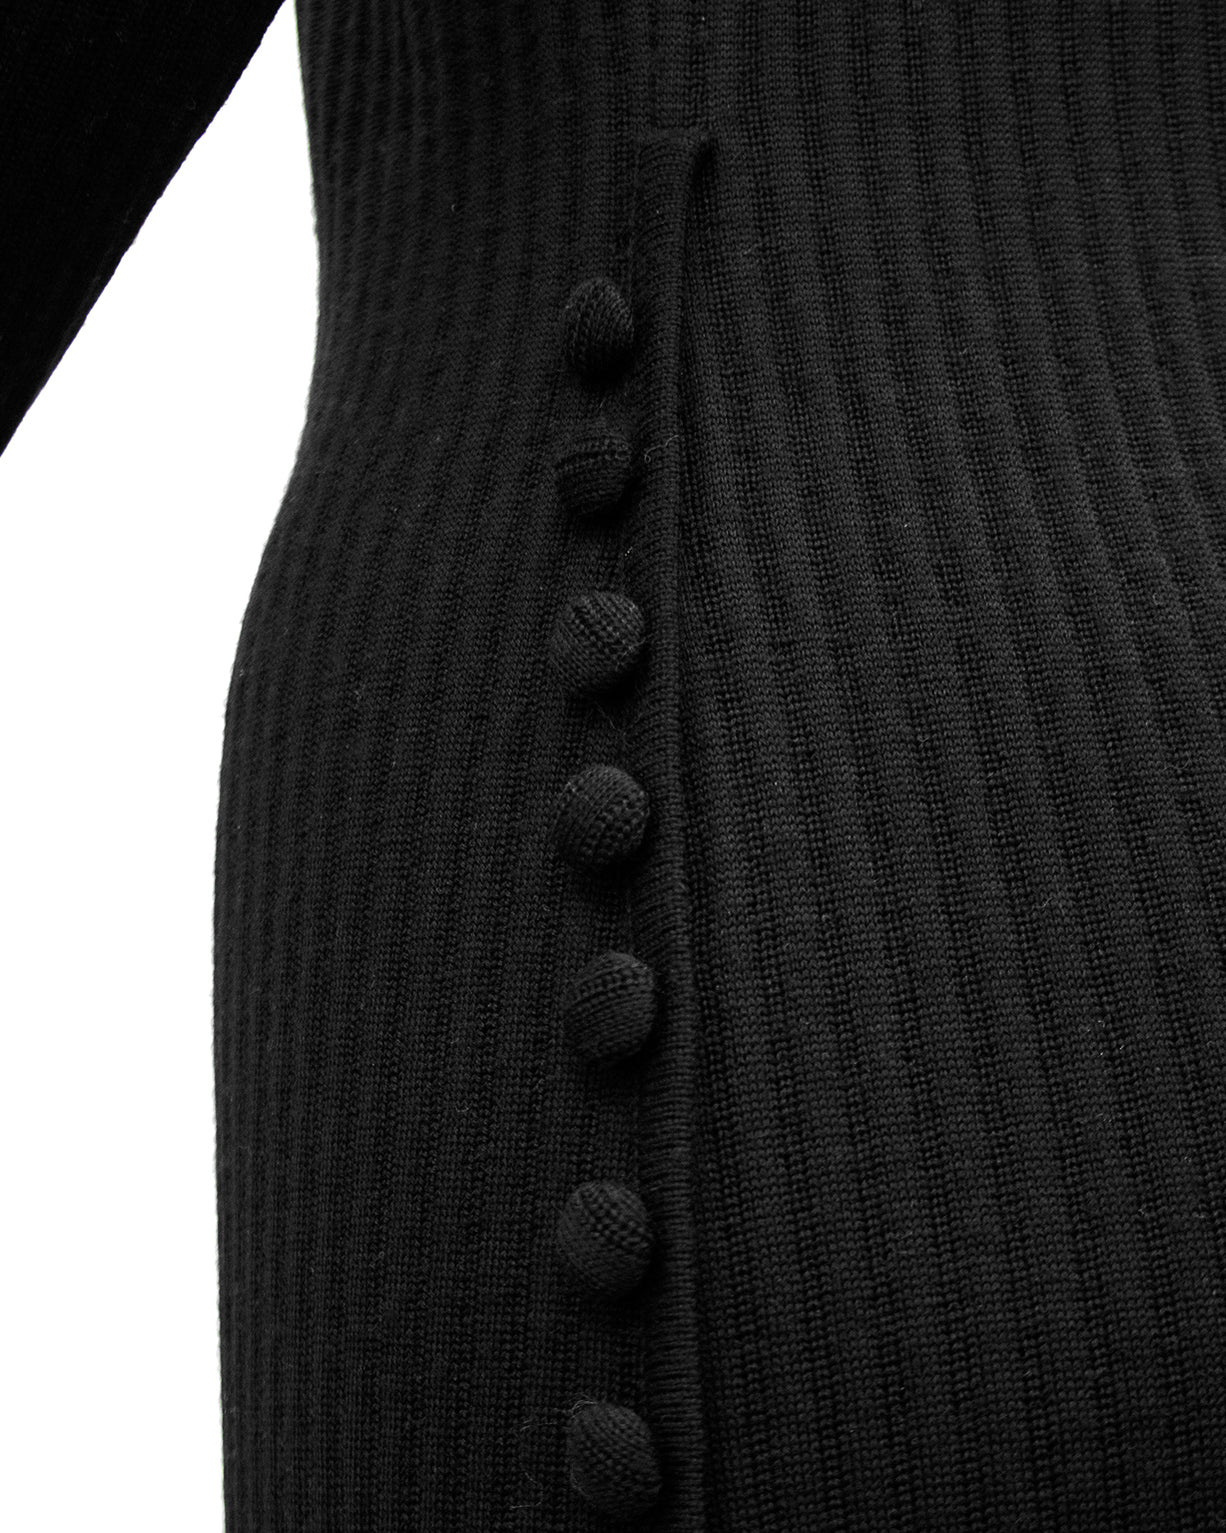 Black Knit Gown – Vintage Couture